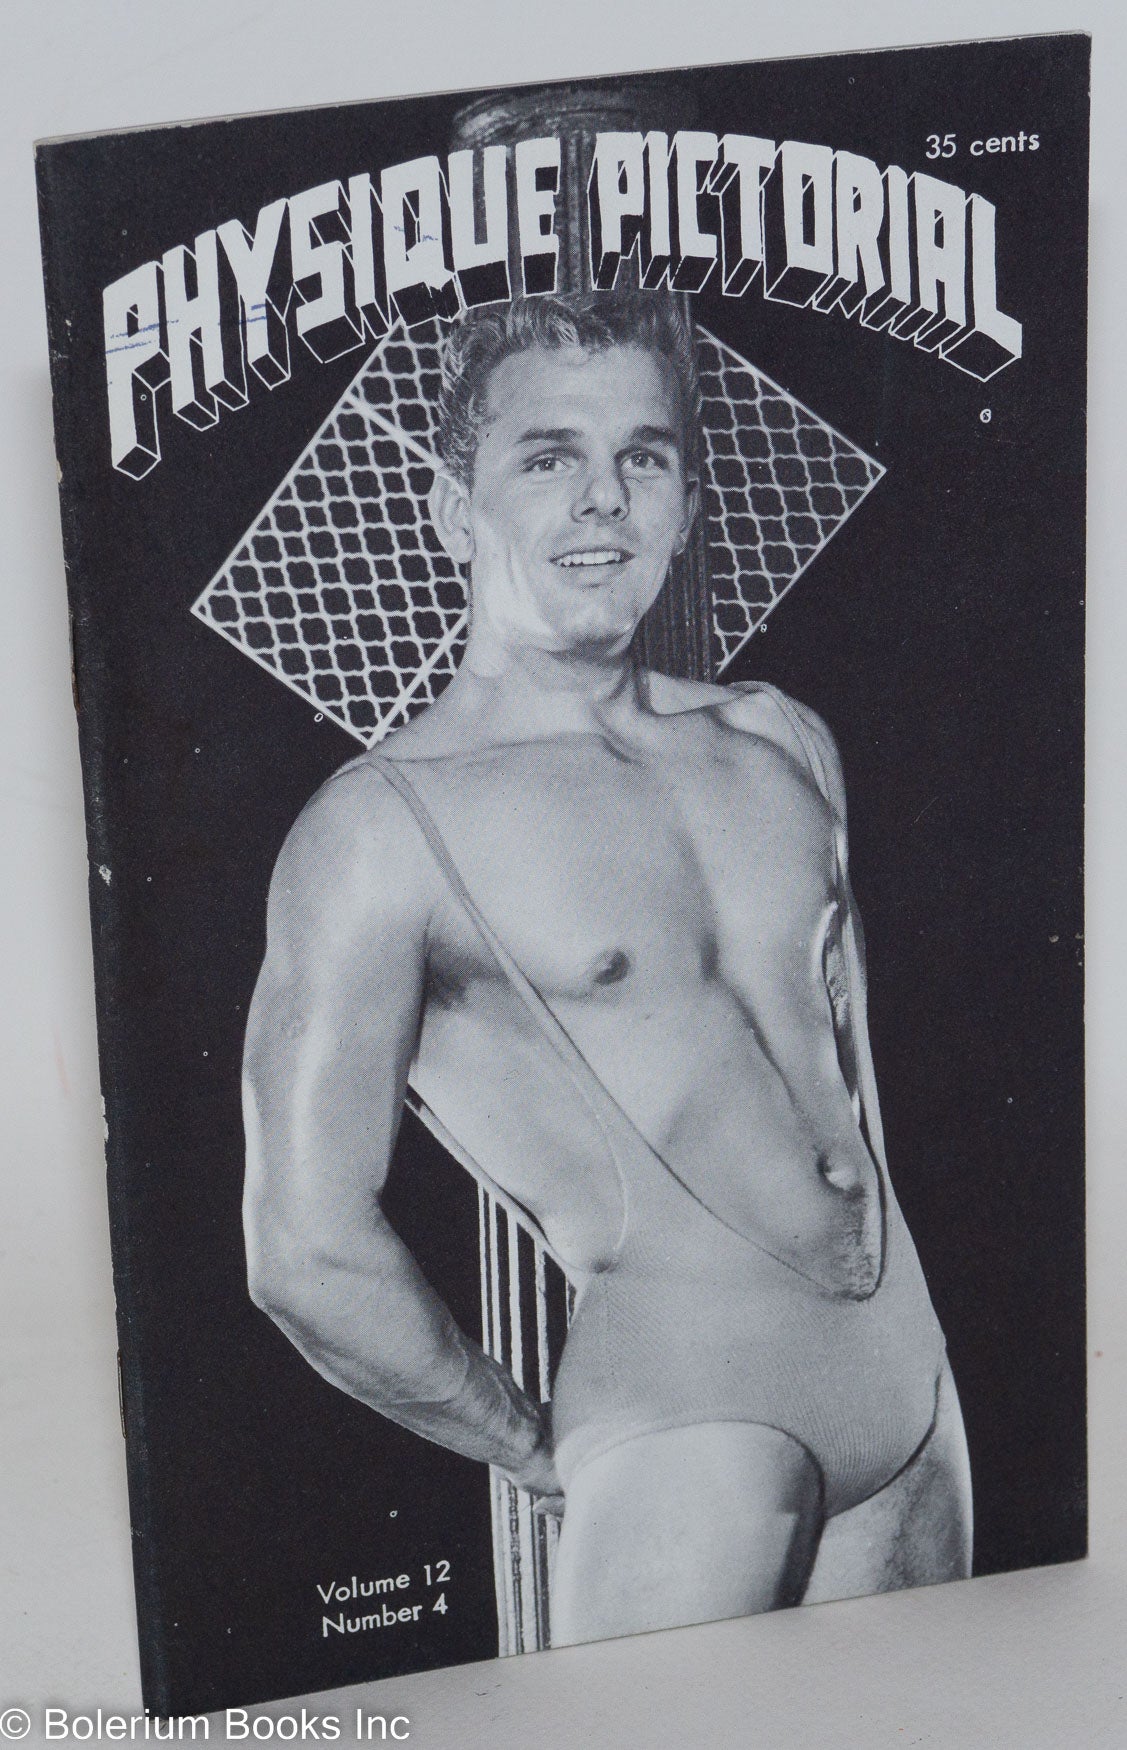 Vintage Finnish Forbidden Porn Magazine - Physique Pictorial vol. 12, #4, May 1963 | Bob Mizer, Tom of Finland  photographer, Jack Teter